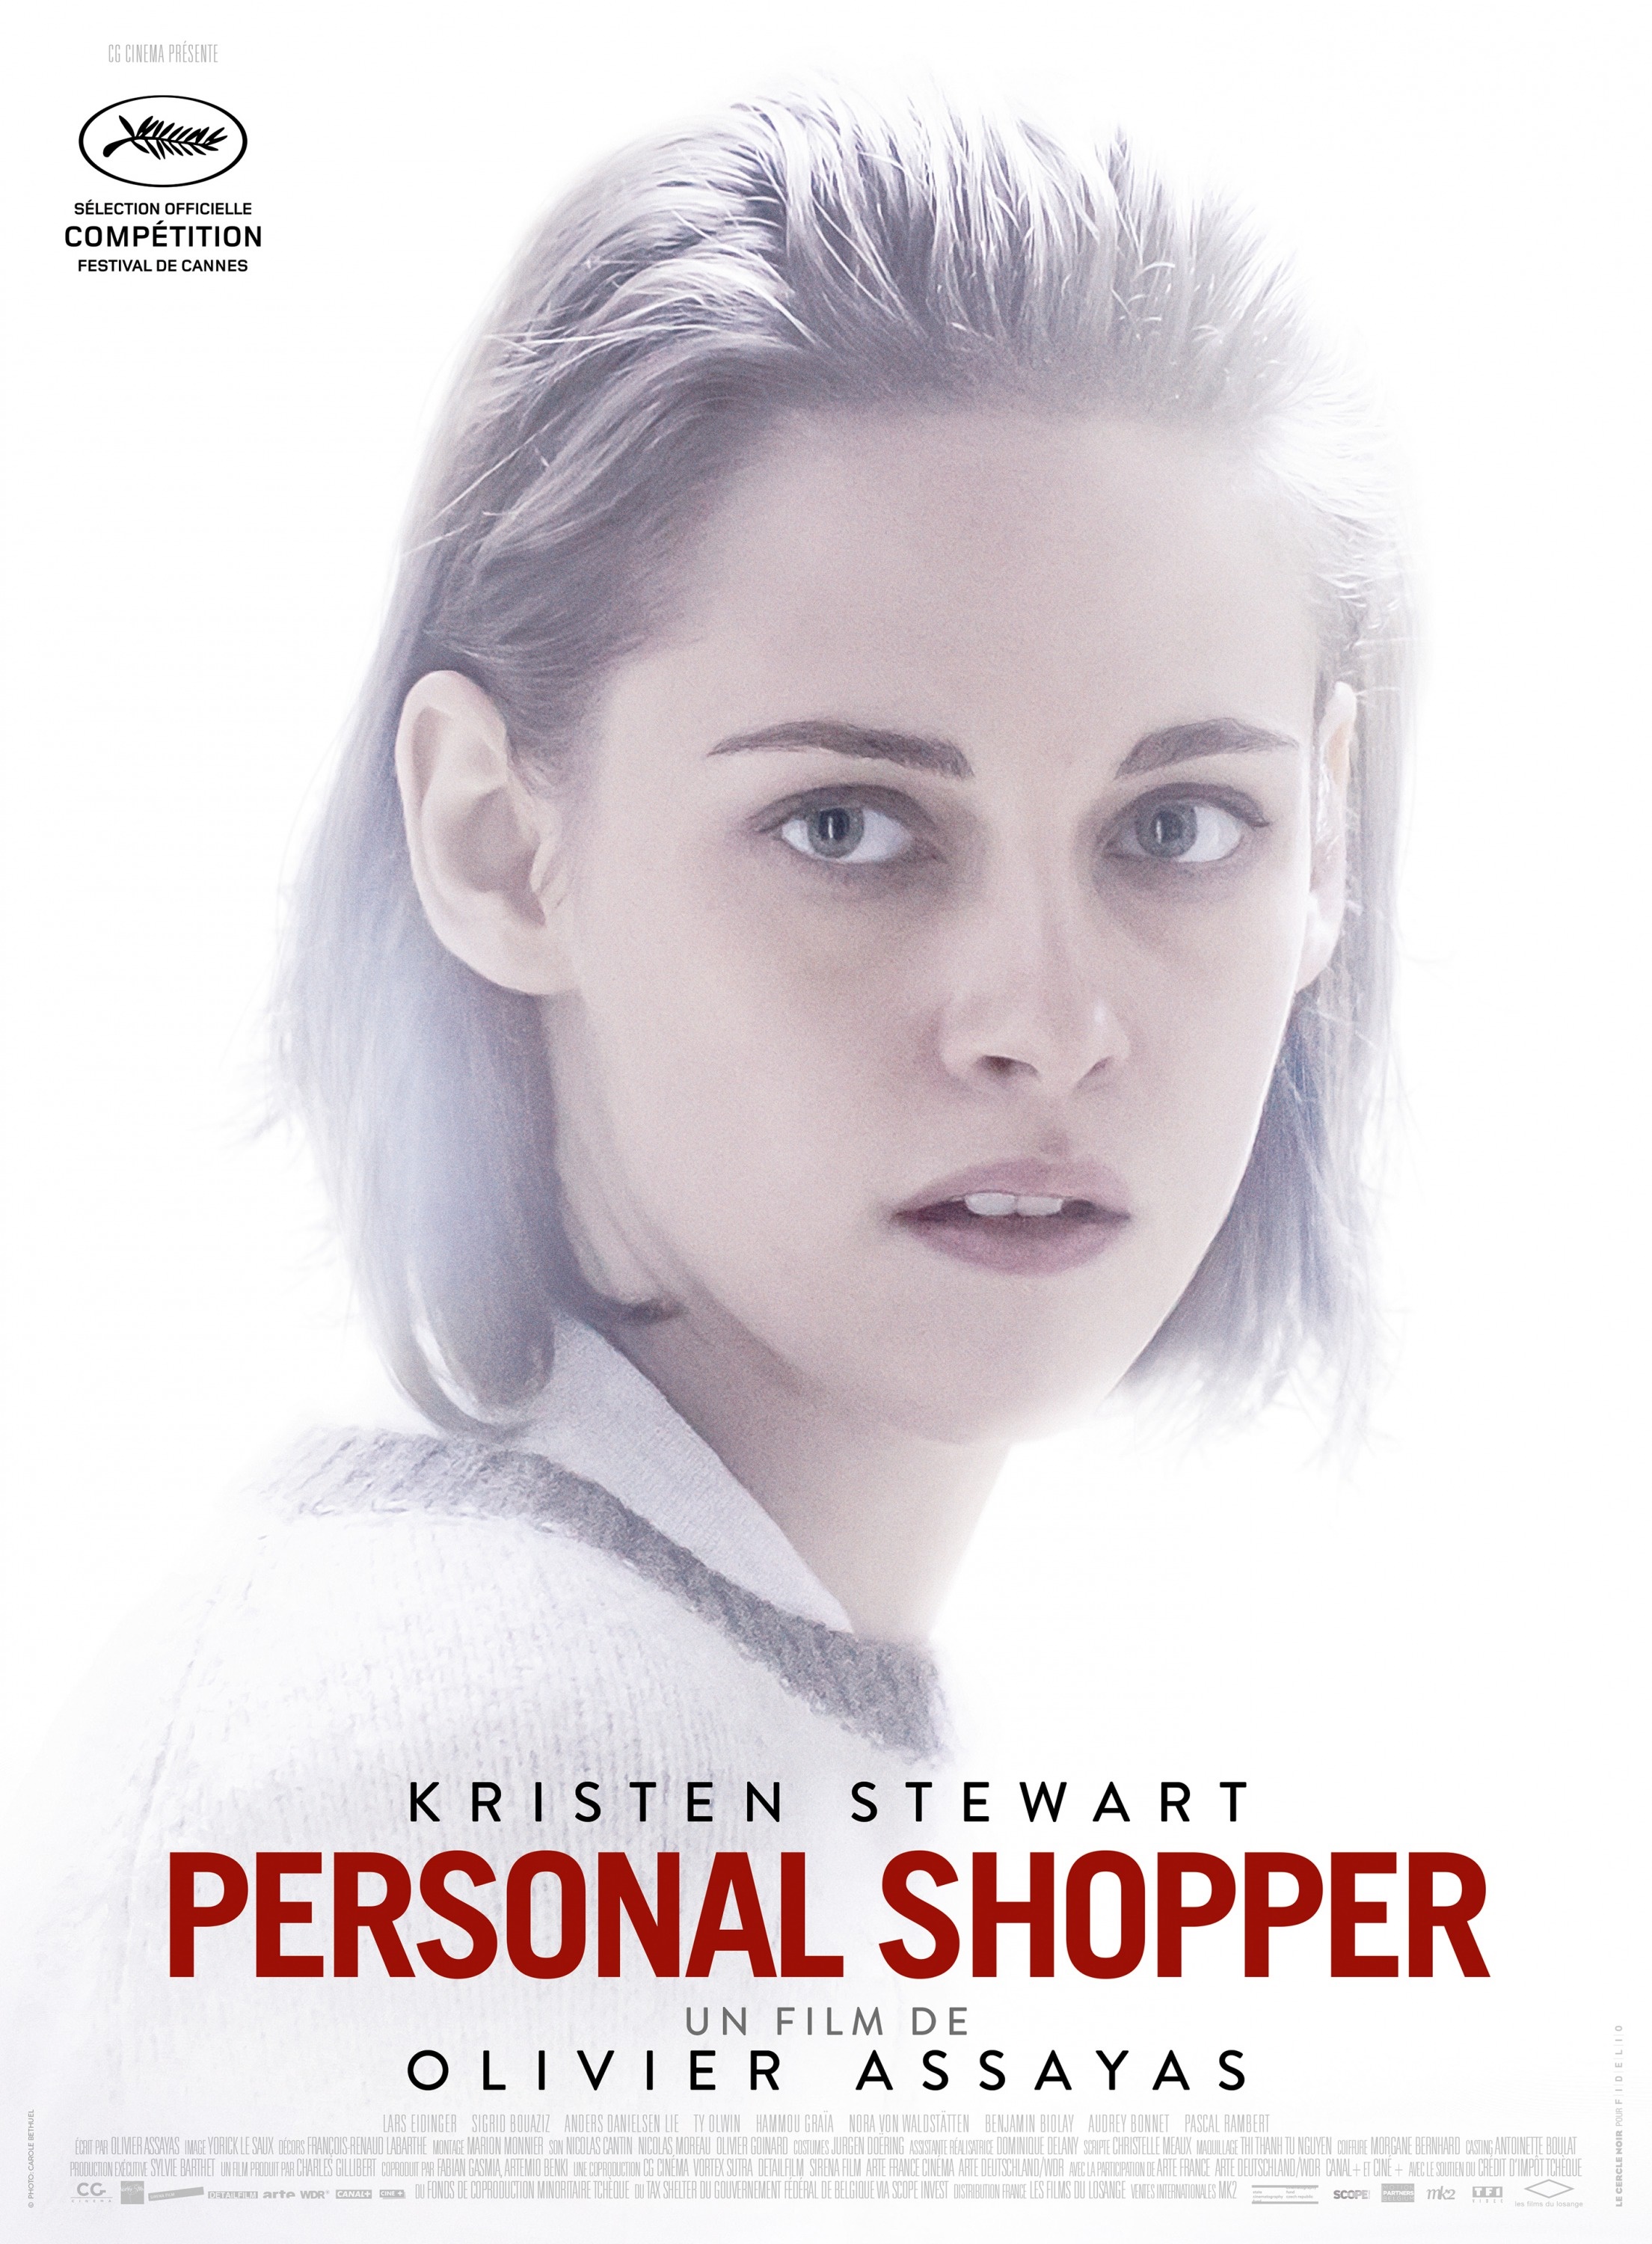 Personal Shopper film review: mild fright in Paris